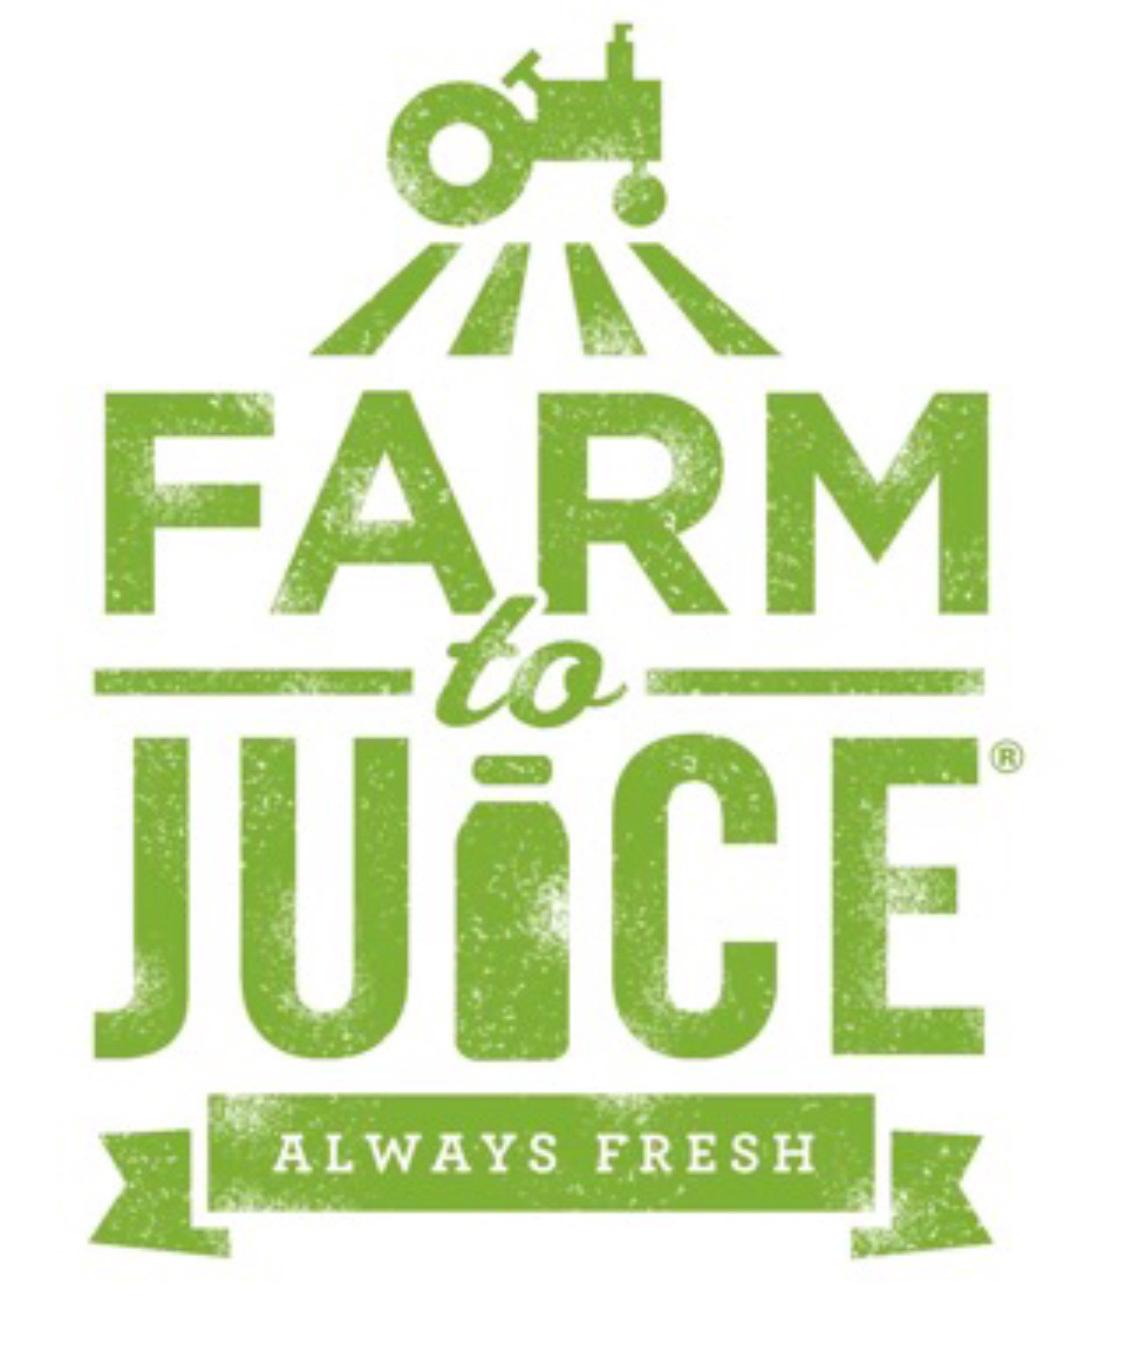 Farm to Juice Photo